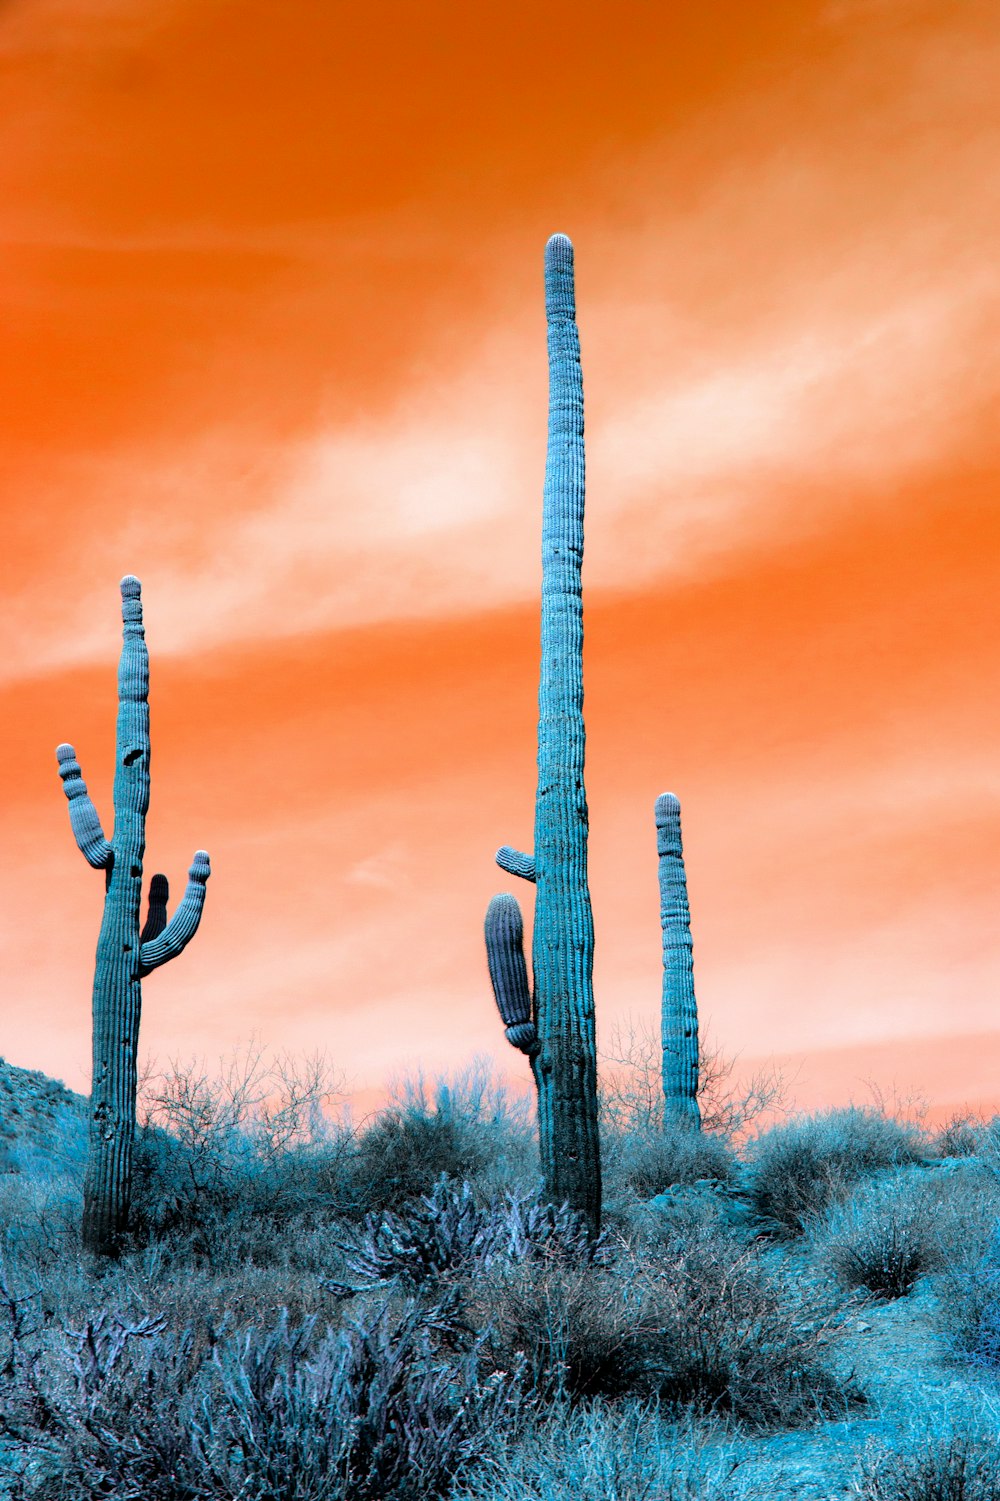 cactus plants under blue sky during daytime